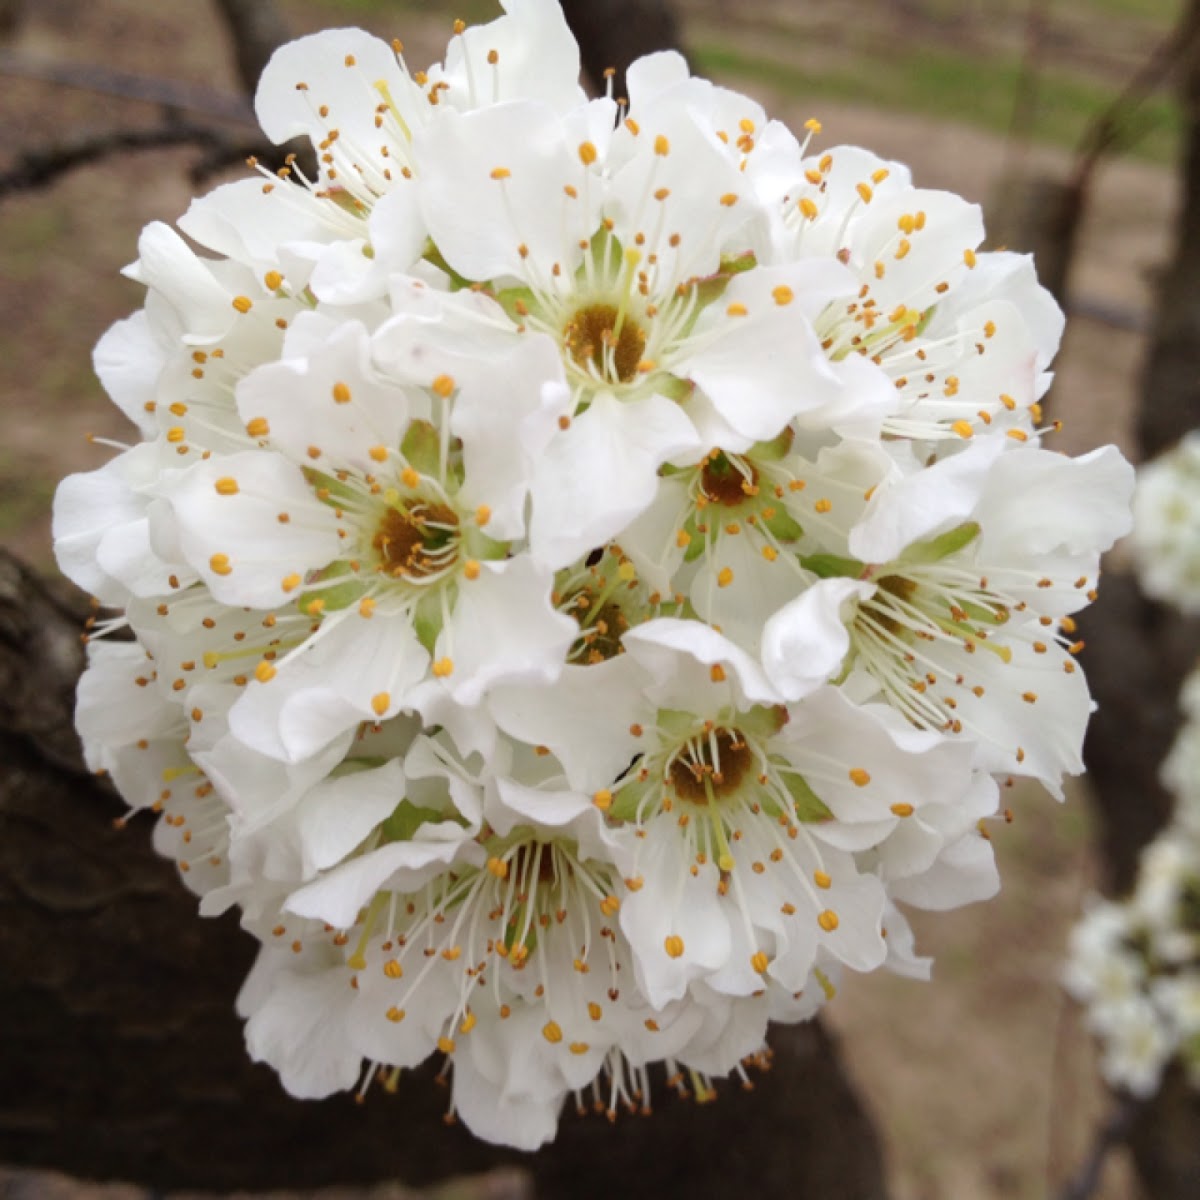 Peach or nectarine blossom